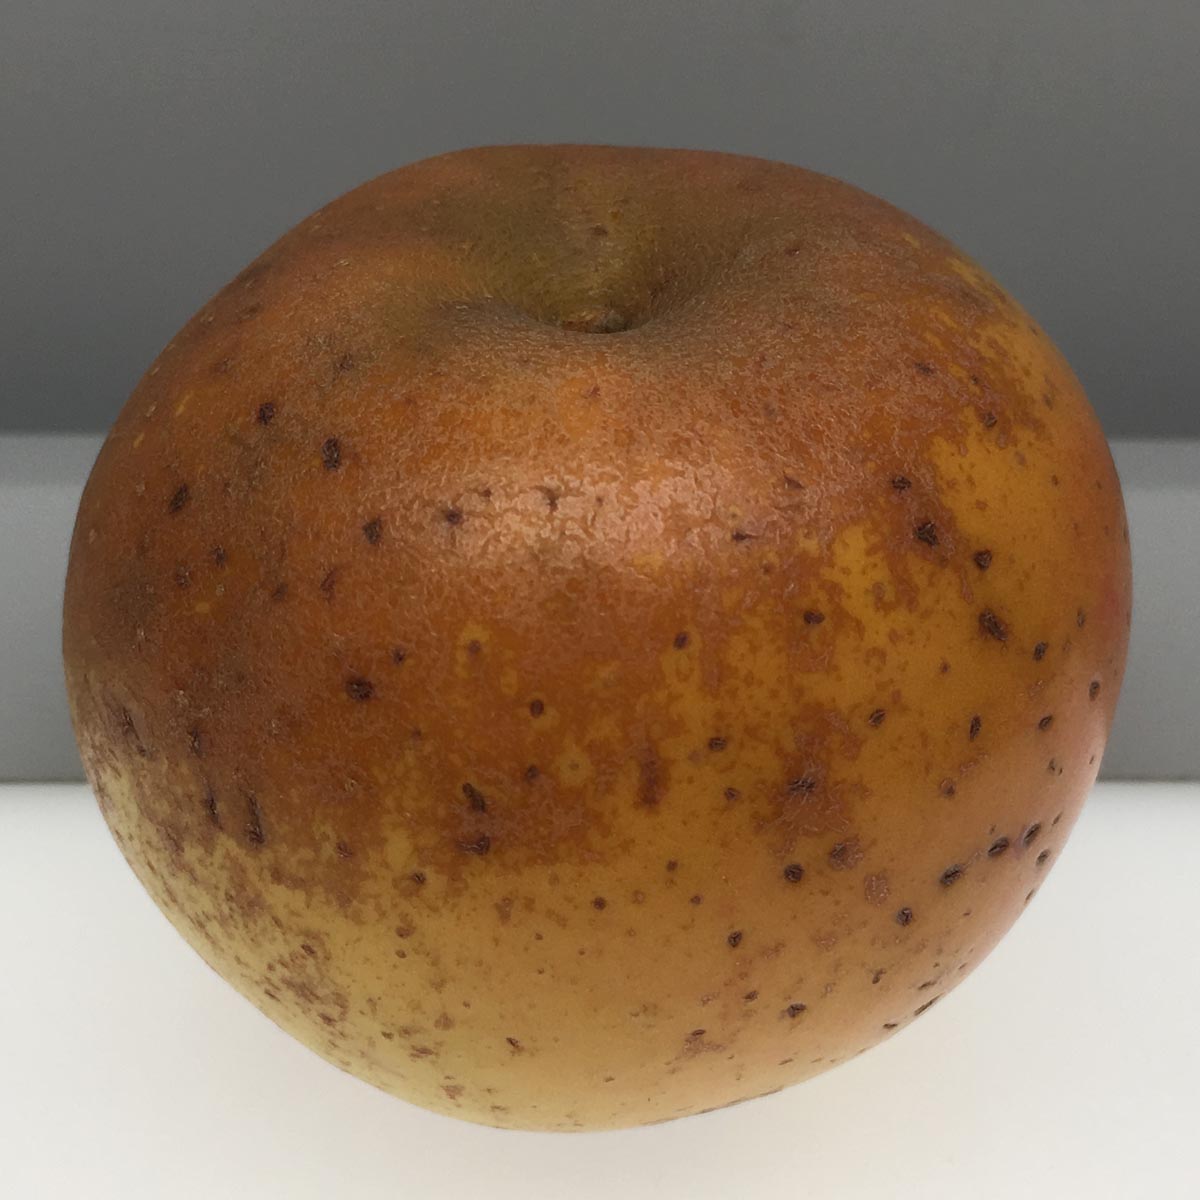 Egremont Russet apple